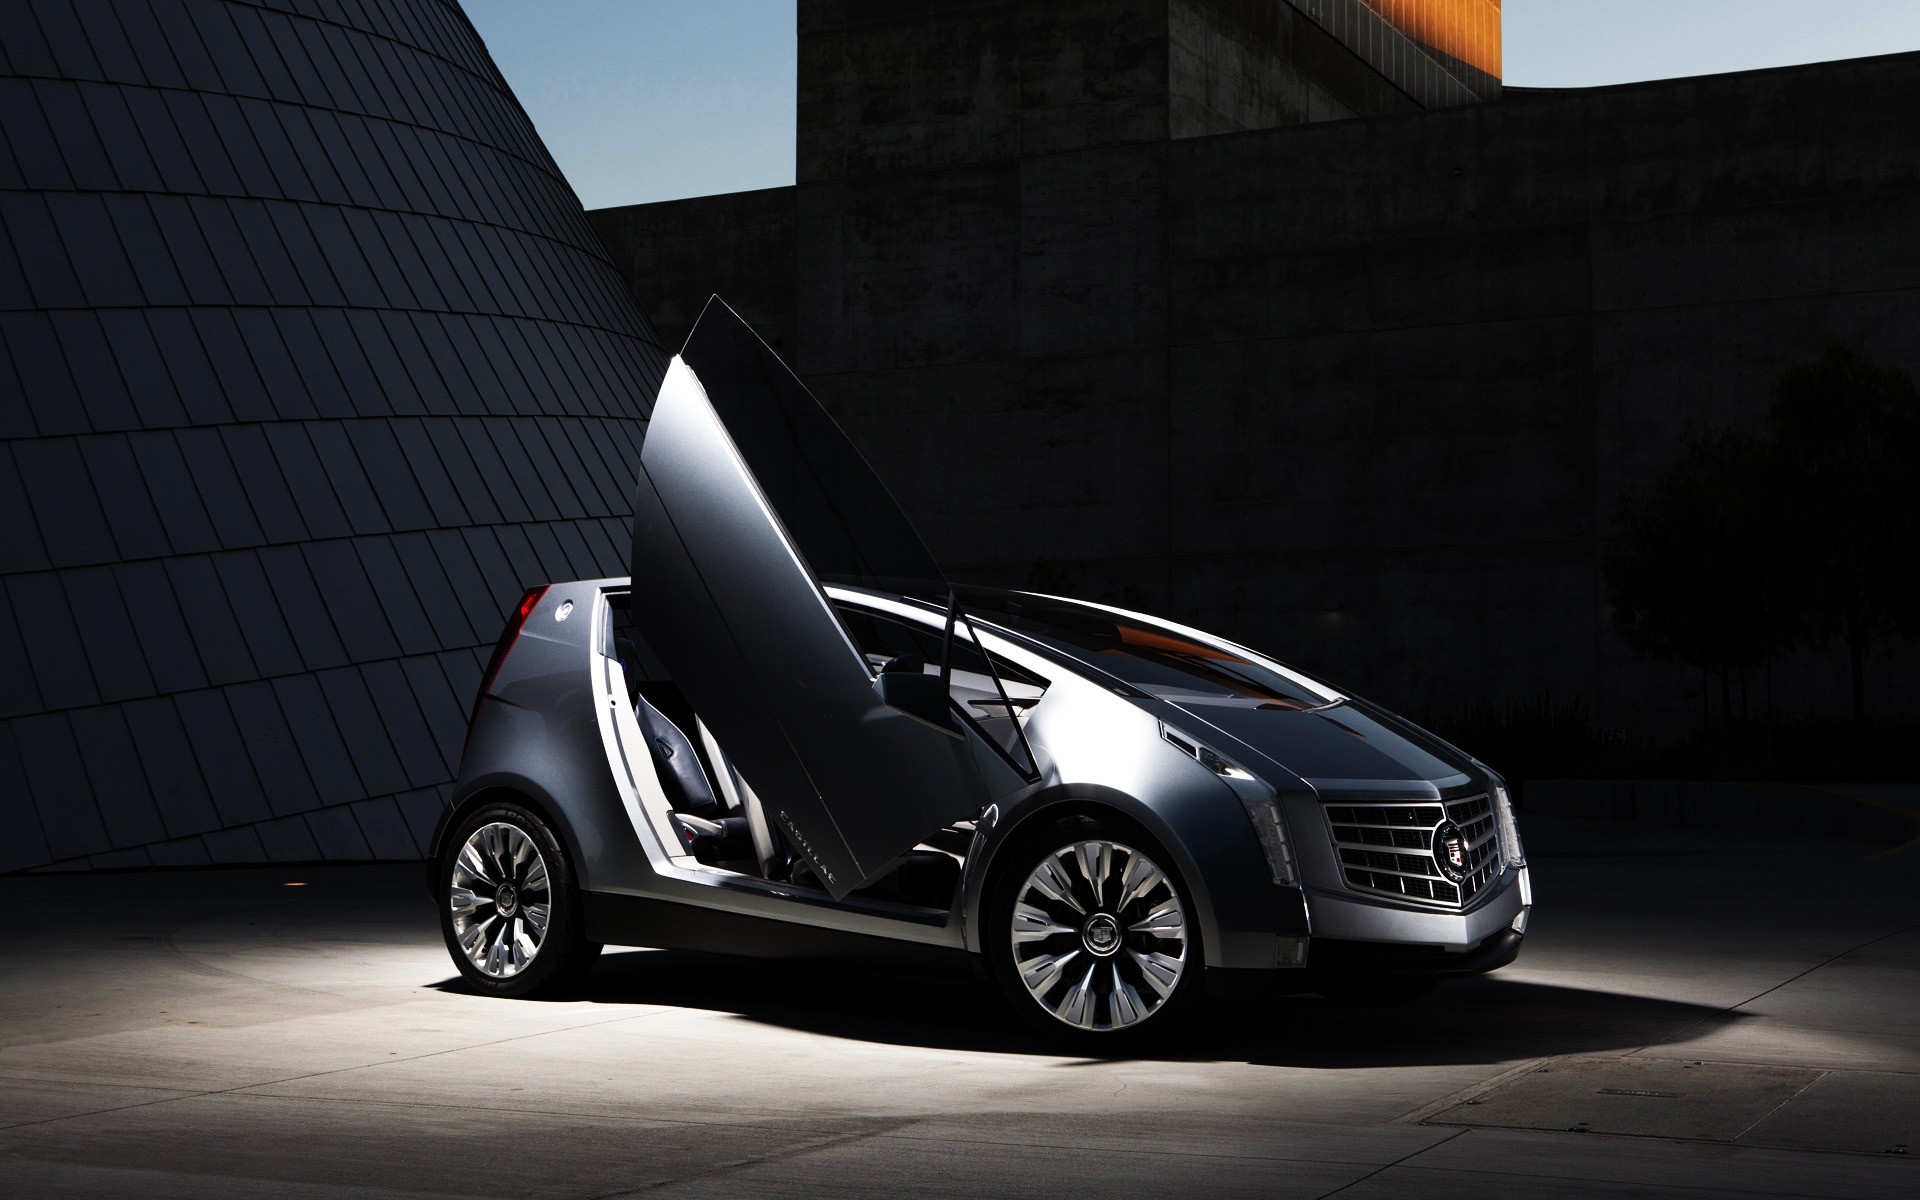 concept cars car vehicle automotive transportation system cadillac urban luxury